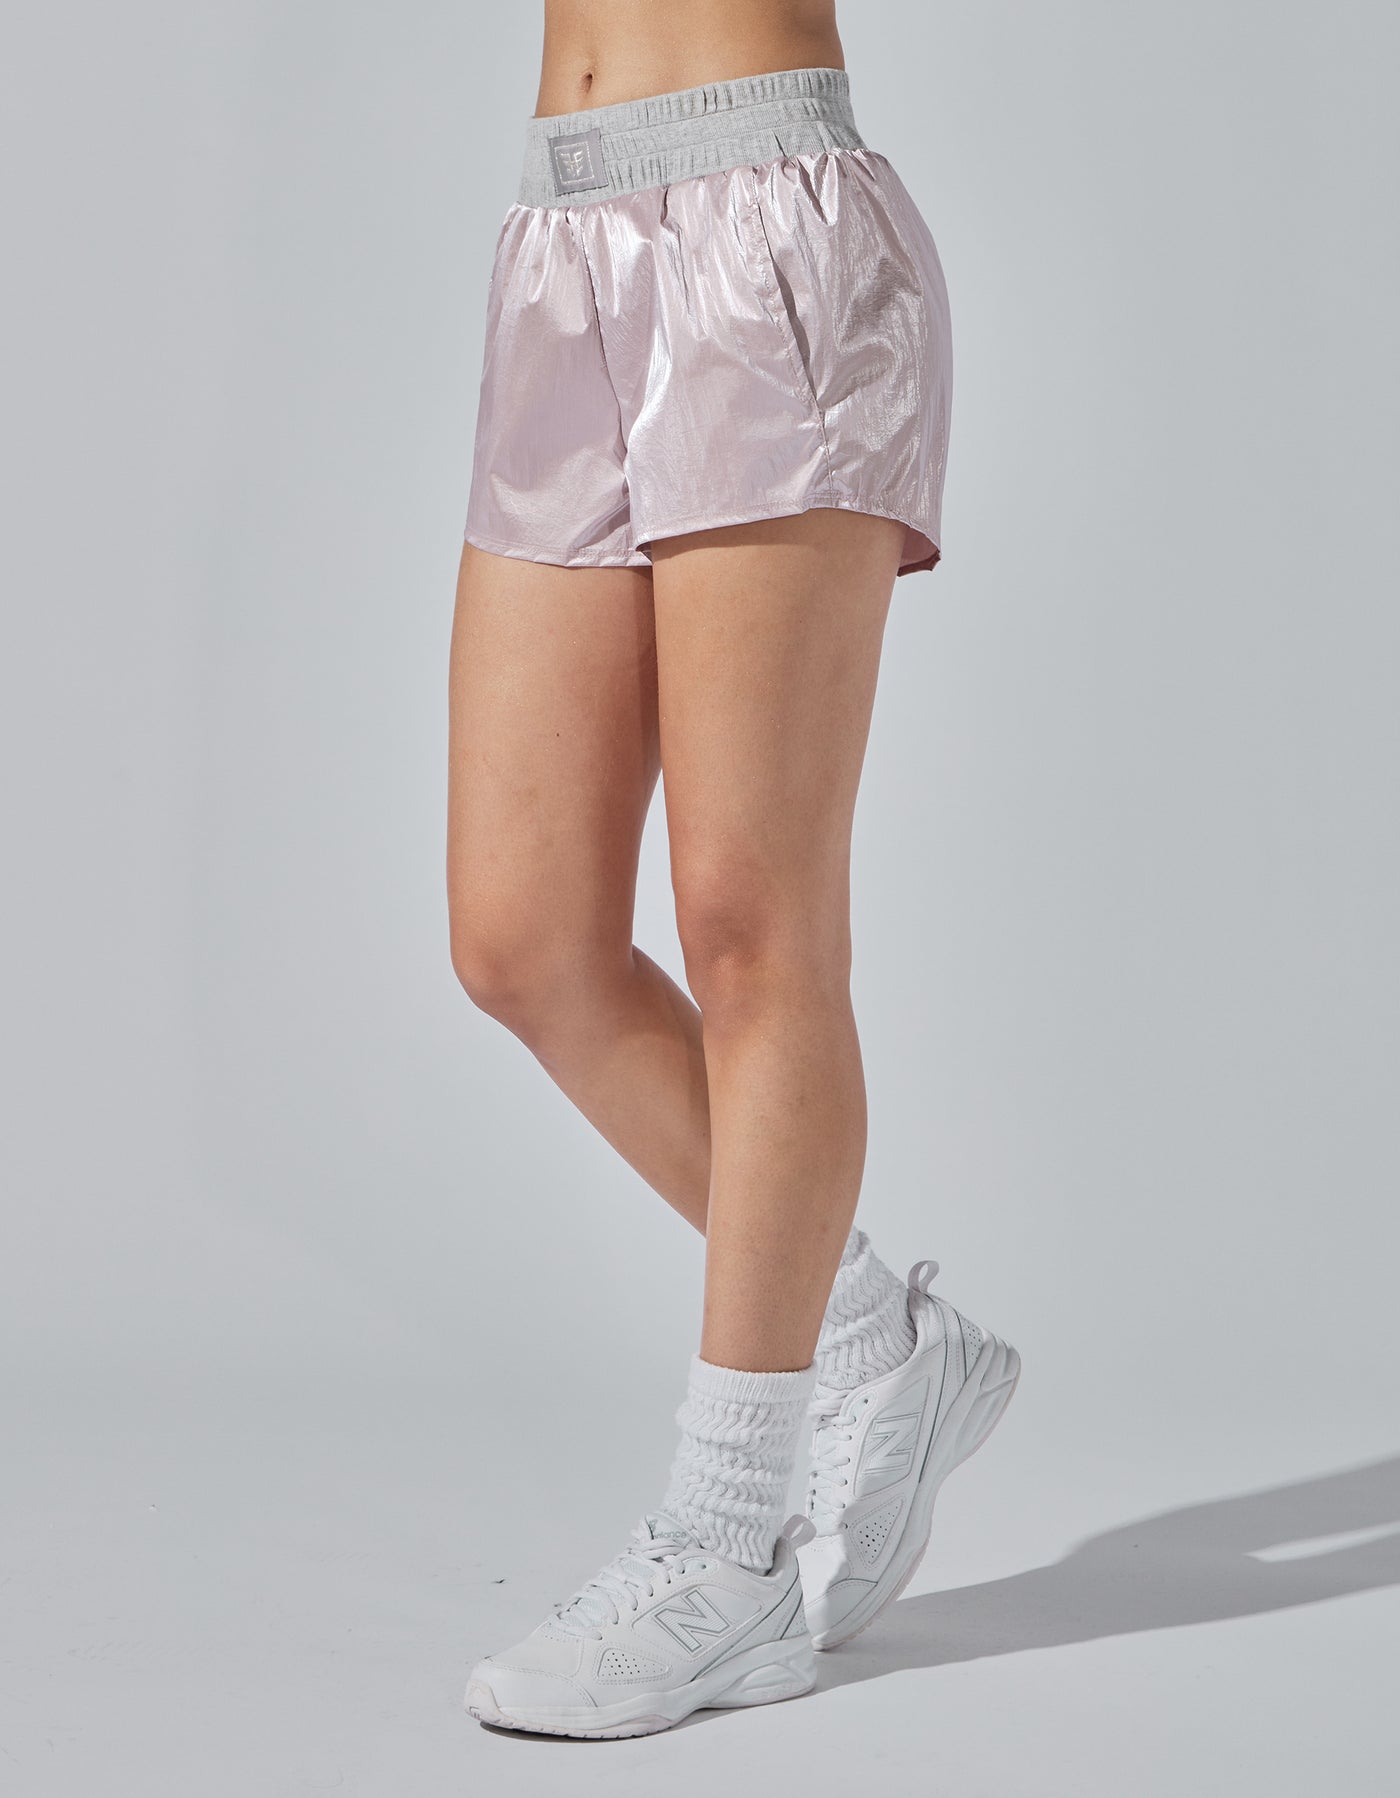 Glow Shorts [Lilac Shimmer]